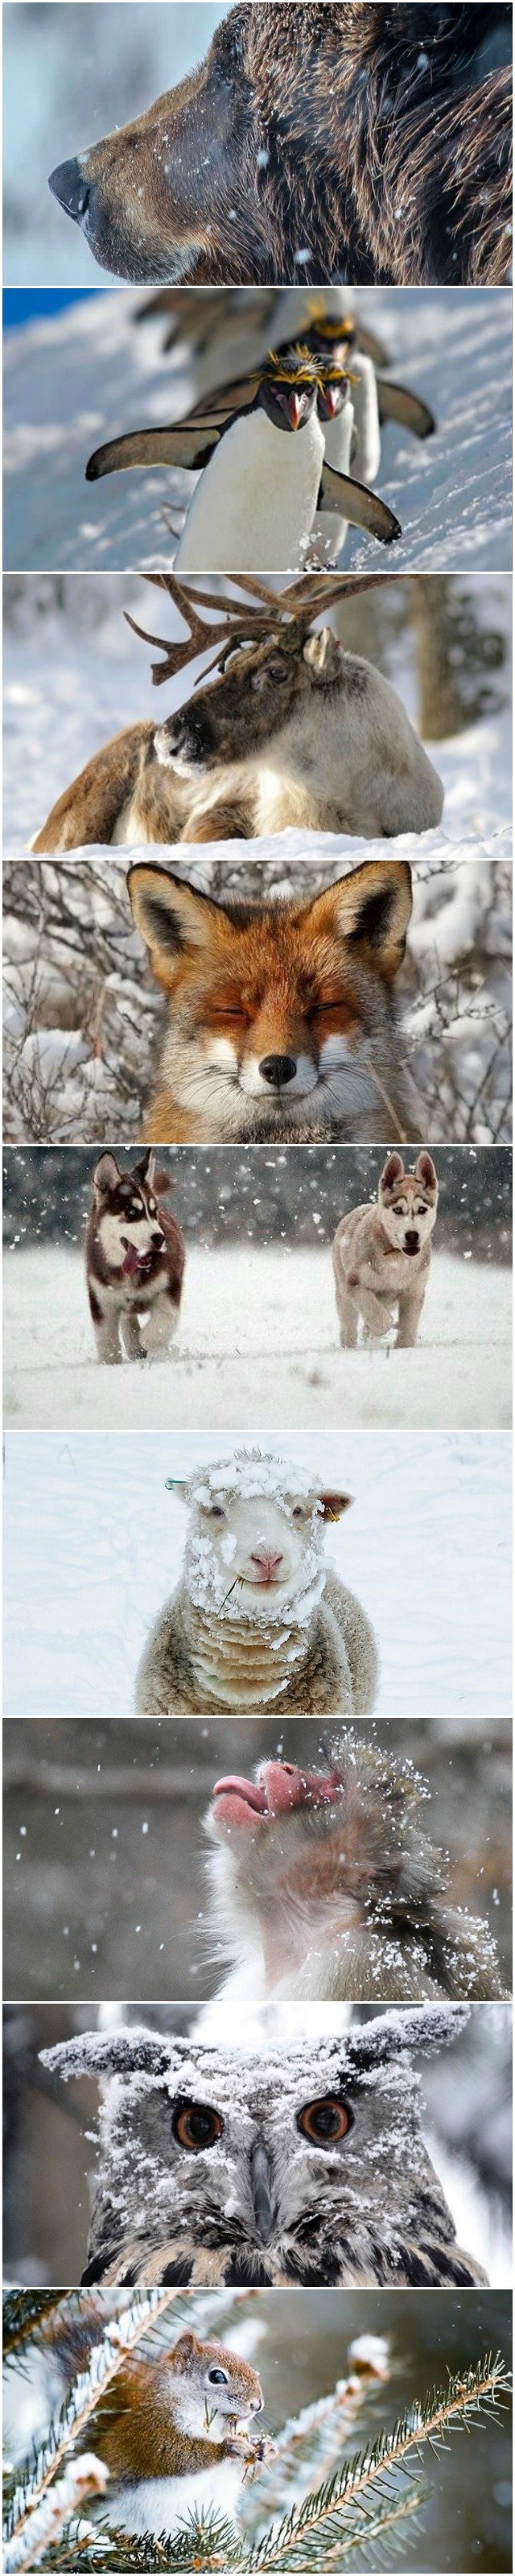 animals-enjoying-the-snow